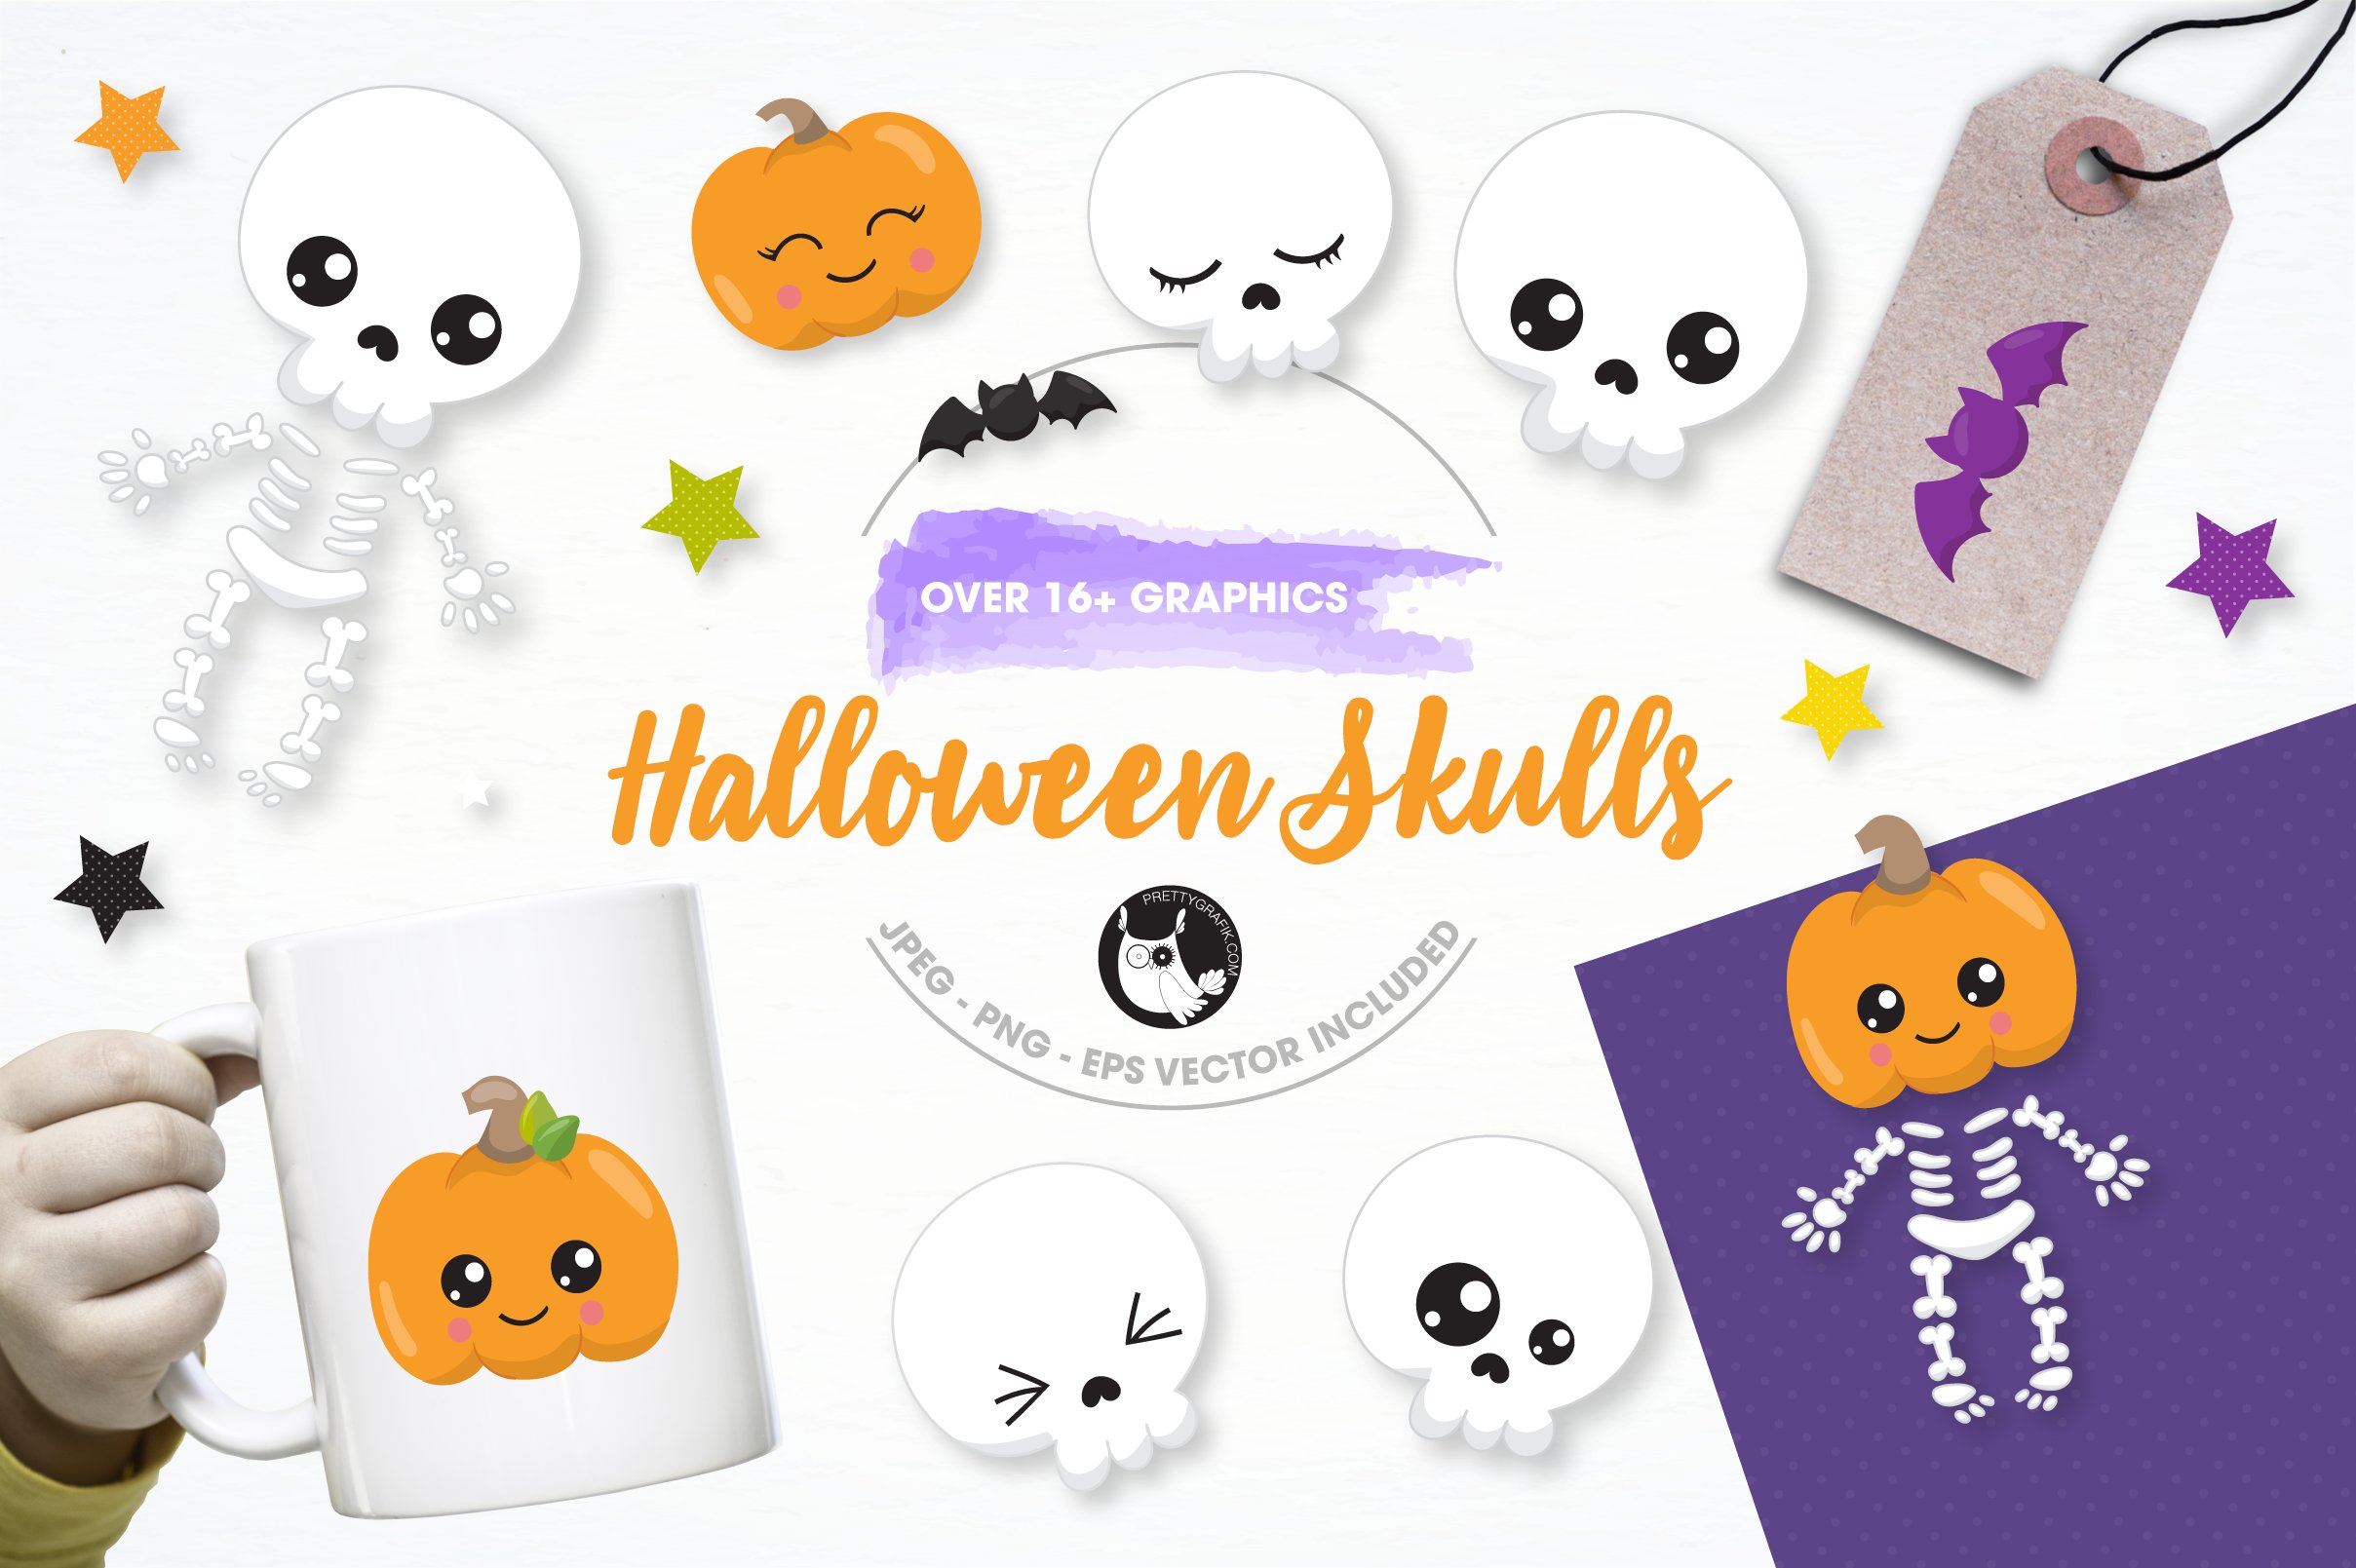 Halloween Skulls Illustration Pack - Vector Image